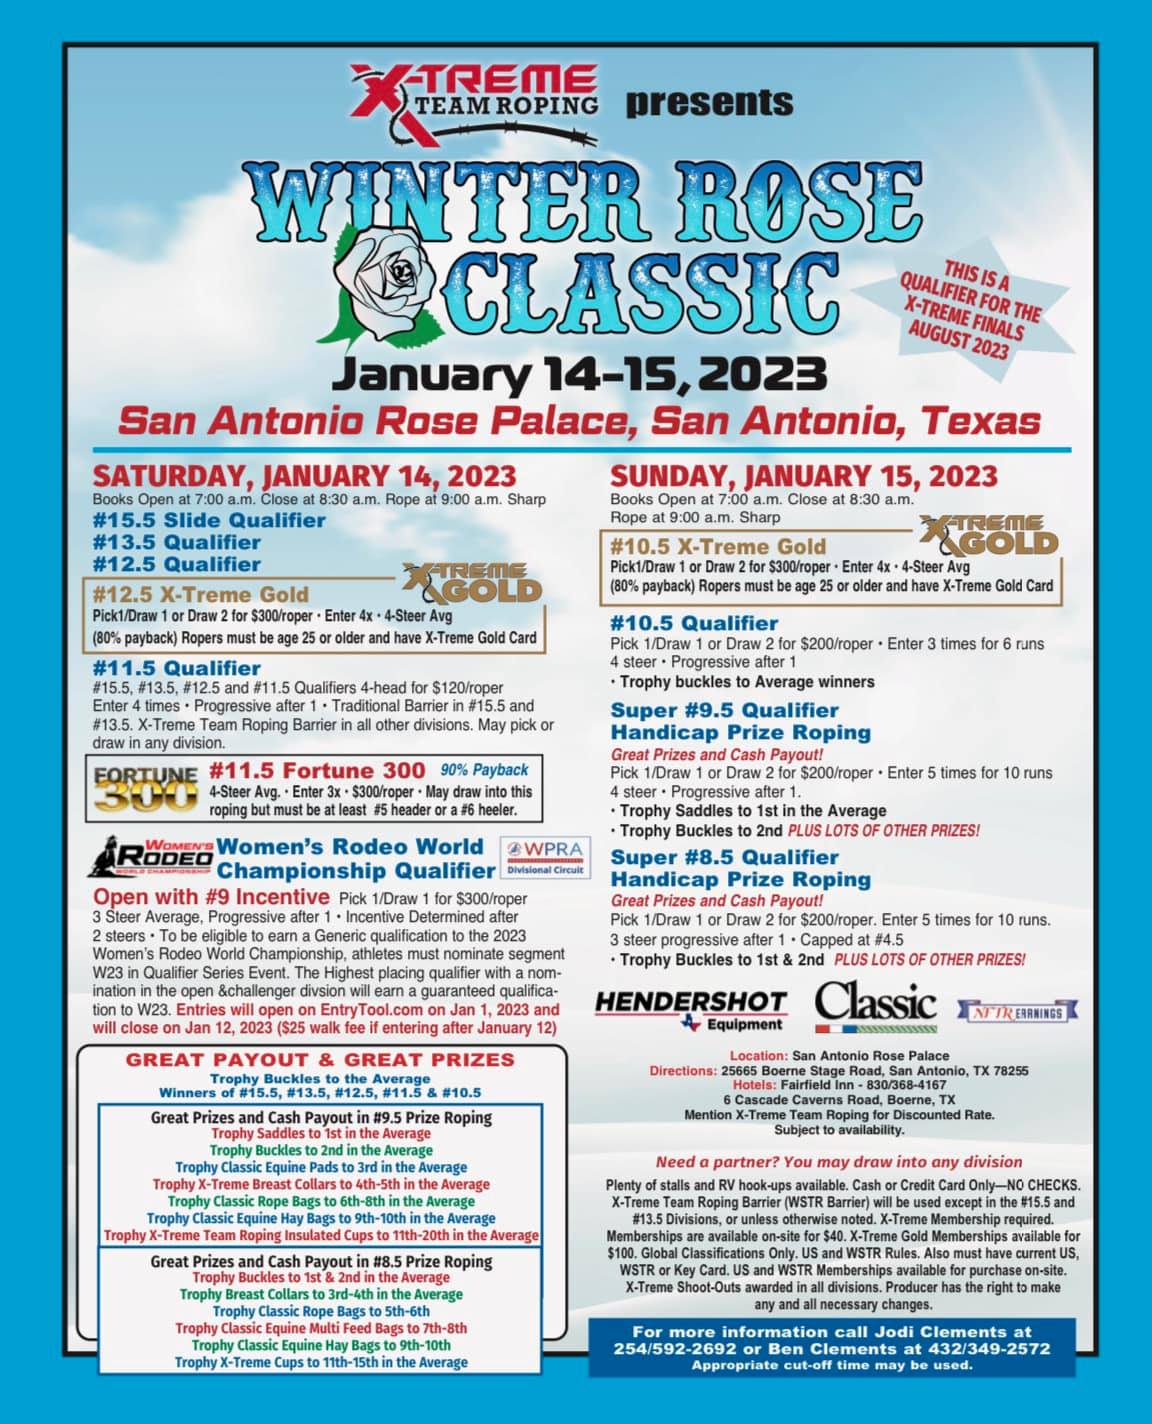 Winter Rose Classic - WCRA/WPRA All Girl on Saturday! Mark your calendars!